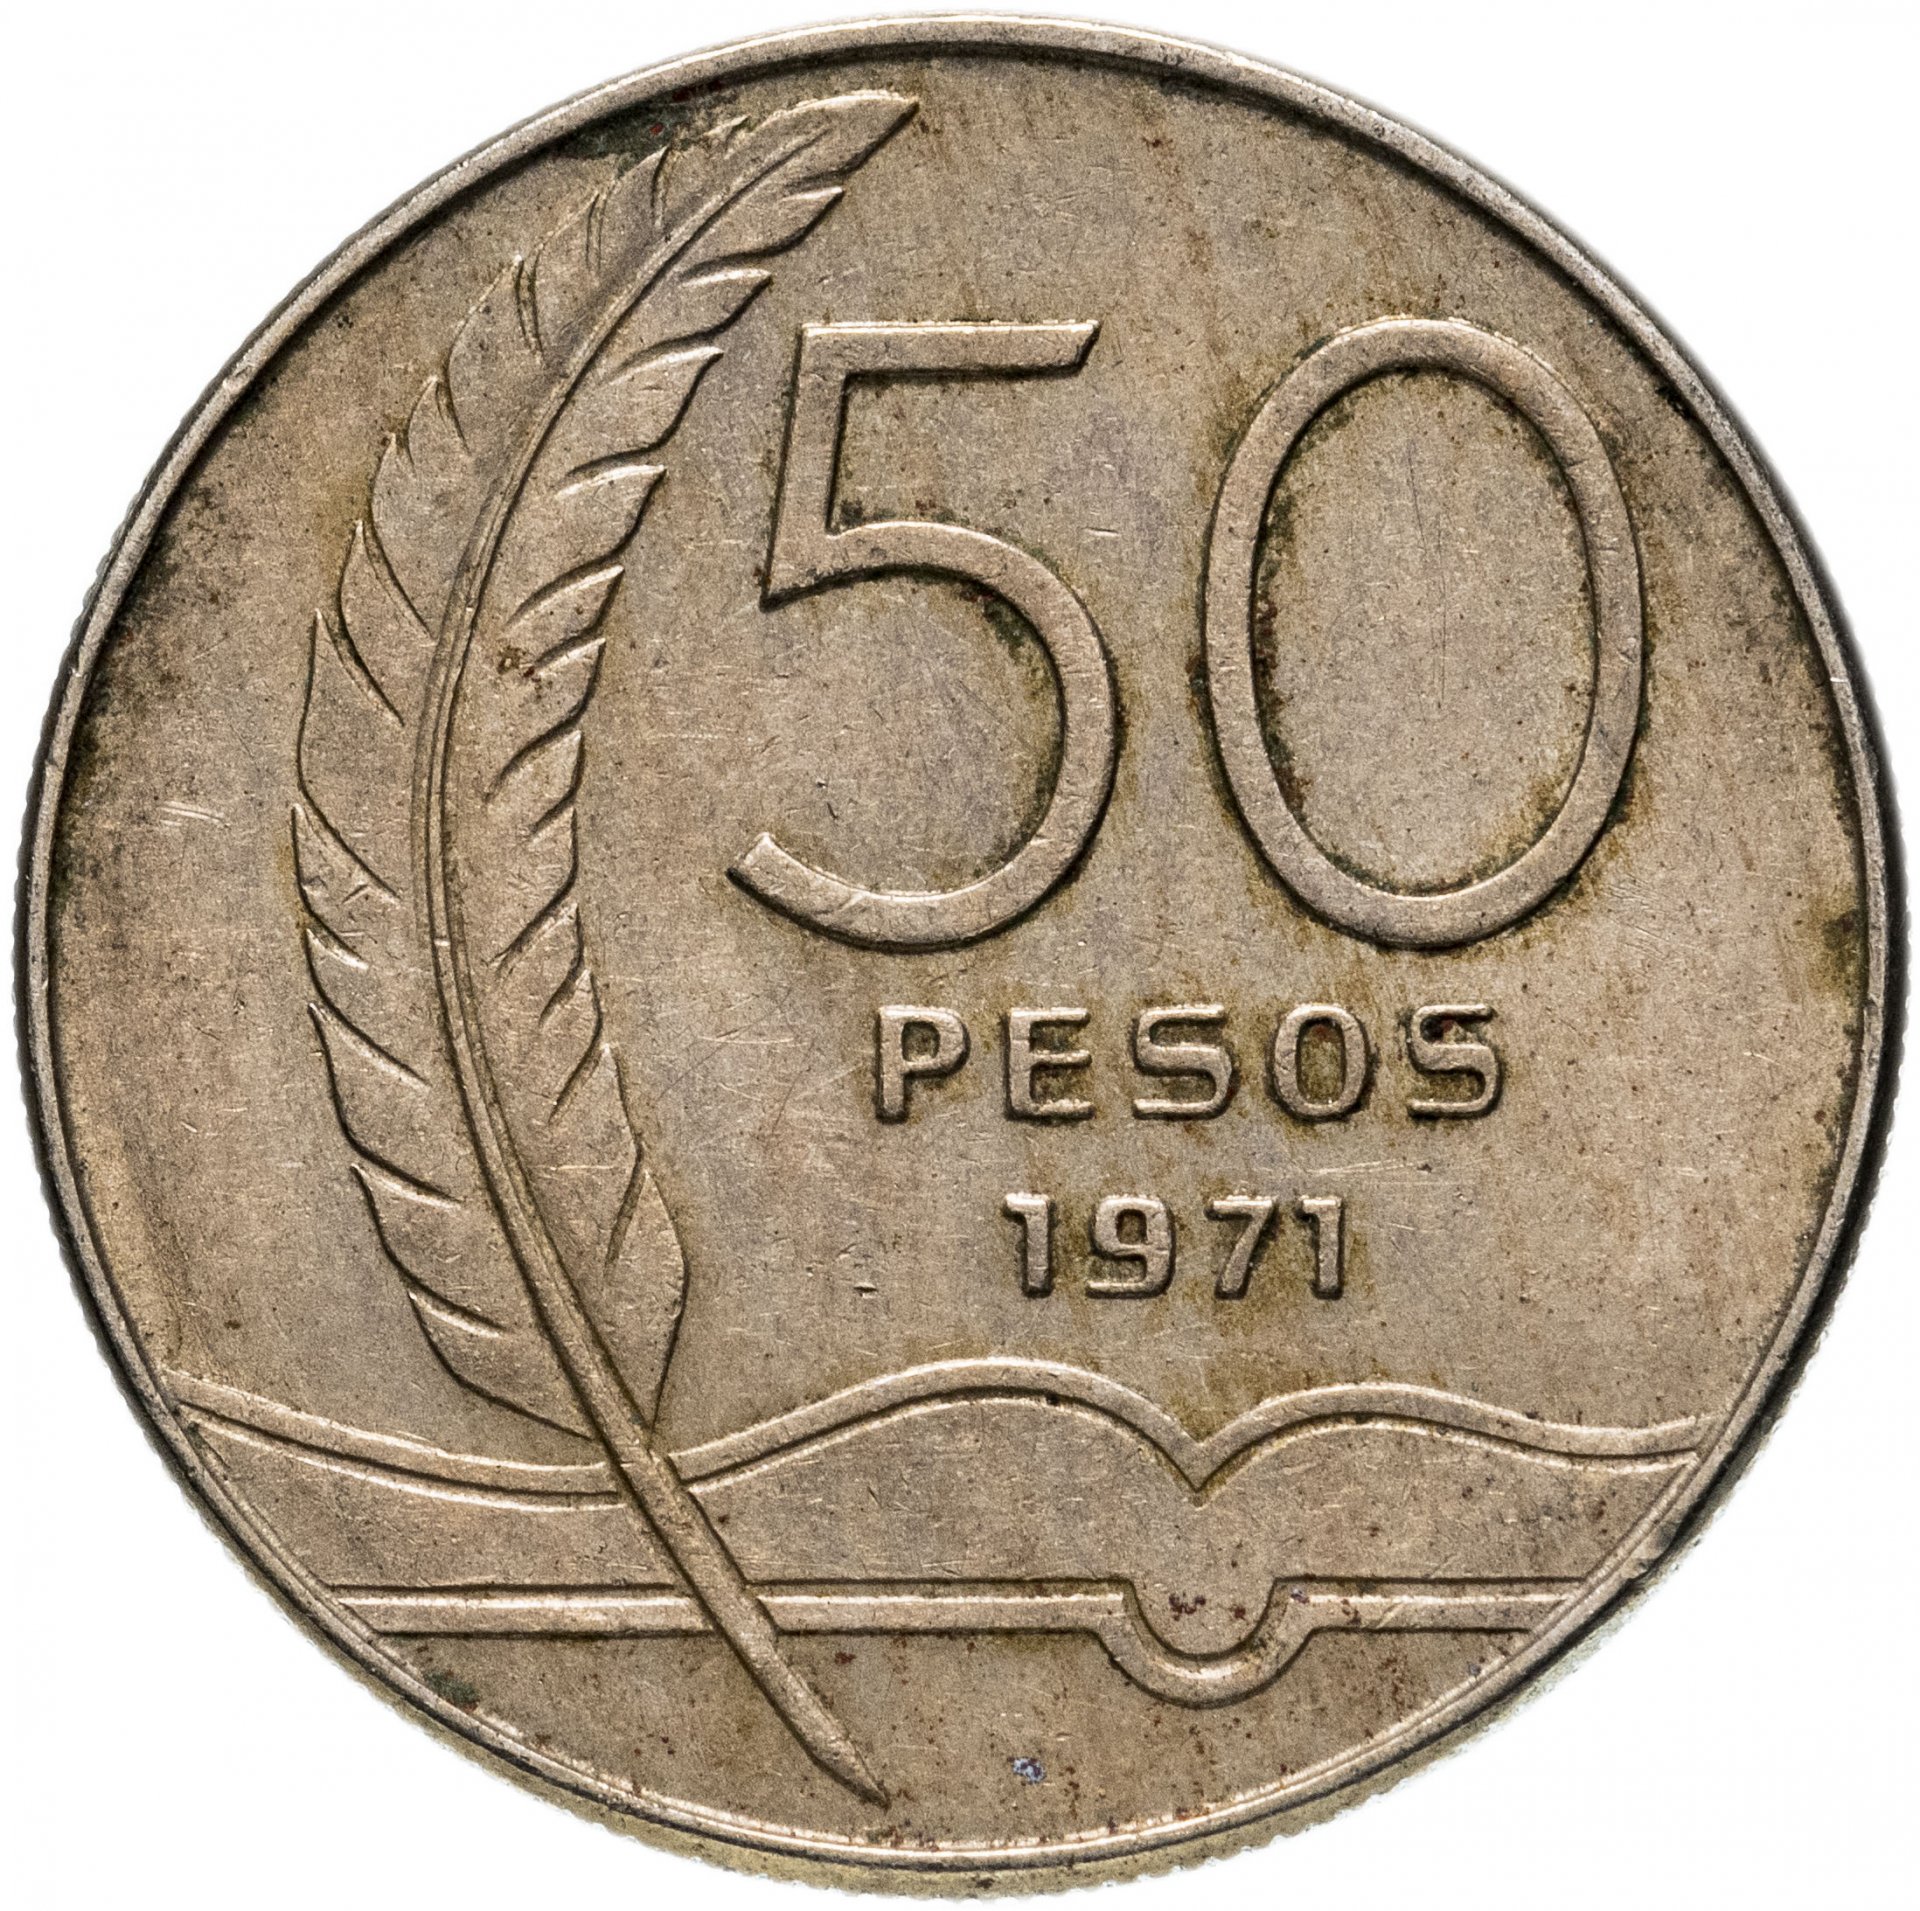 Монета ссср 20 копеек 1961